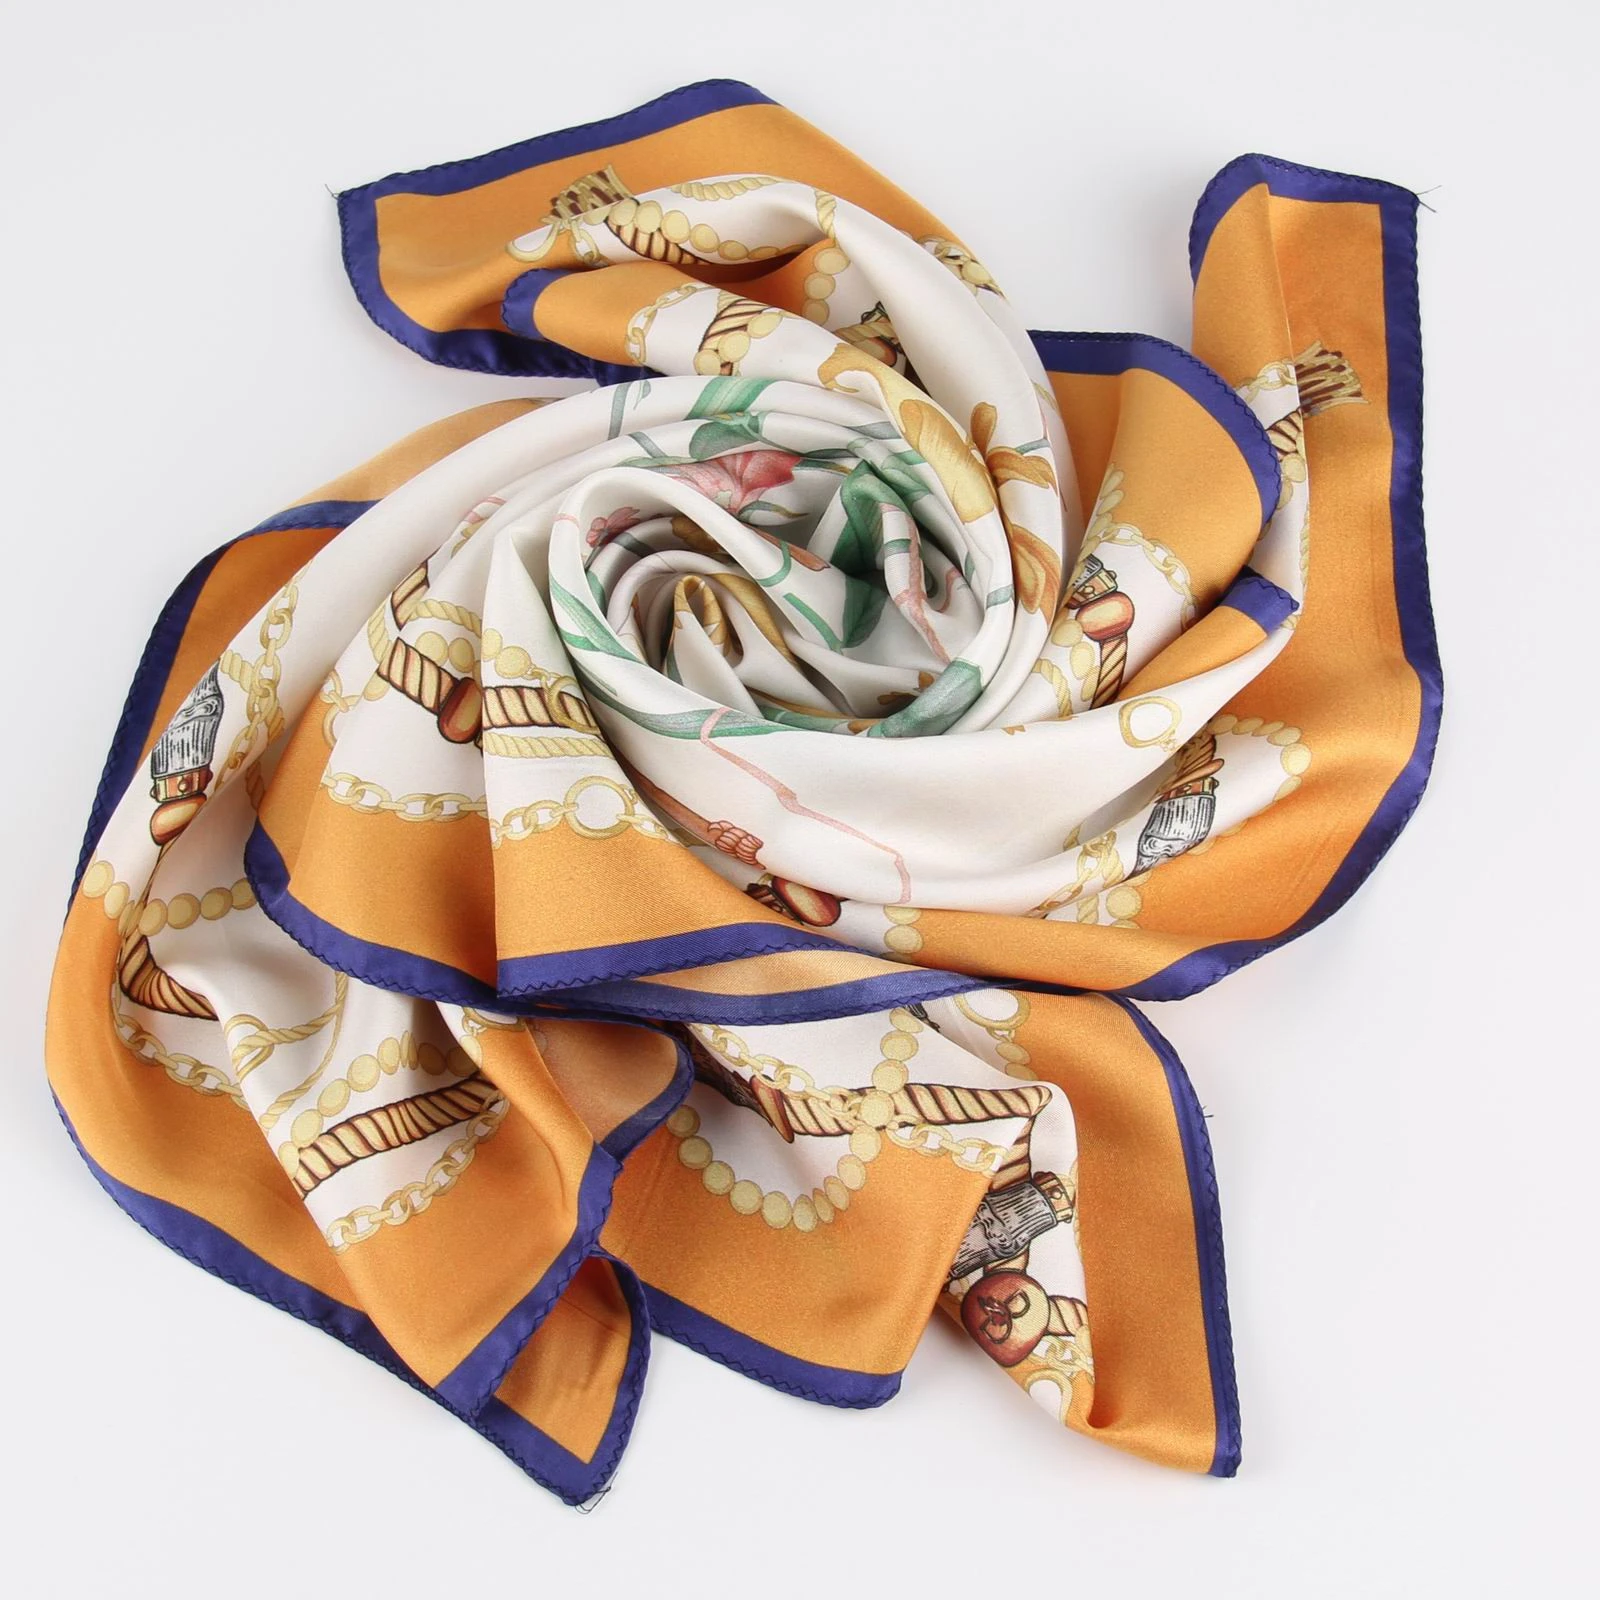 U-SILK multi-function high quality cheap price 100% pure silk scarf and shawl digital printed for women